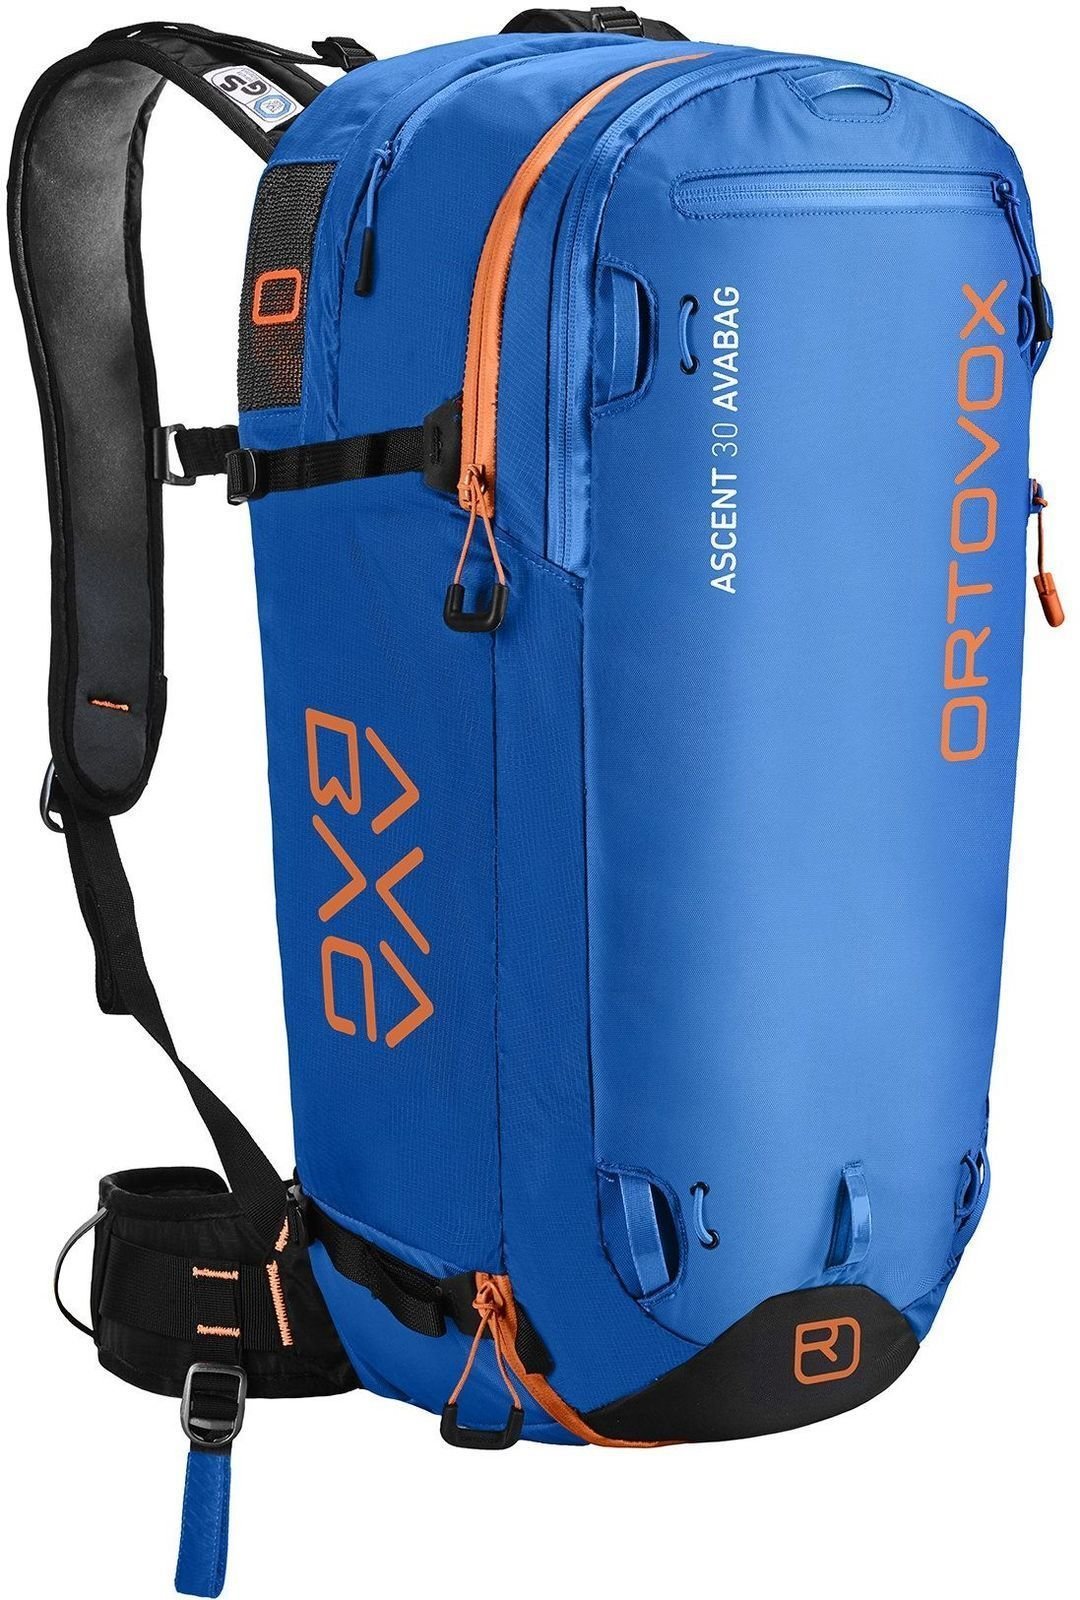 Ski Travel Bag Ortovox Ascent 30 Avabag Kit Safety Blue Ski Travel Bag